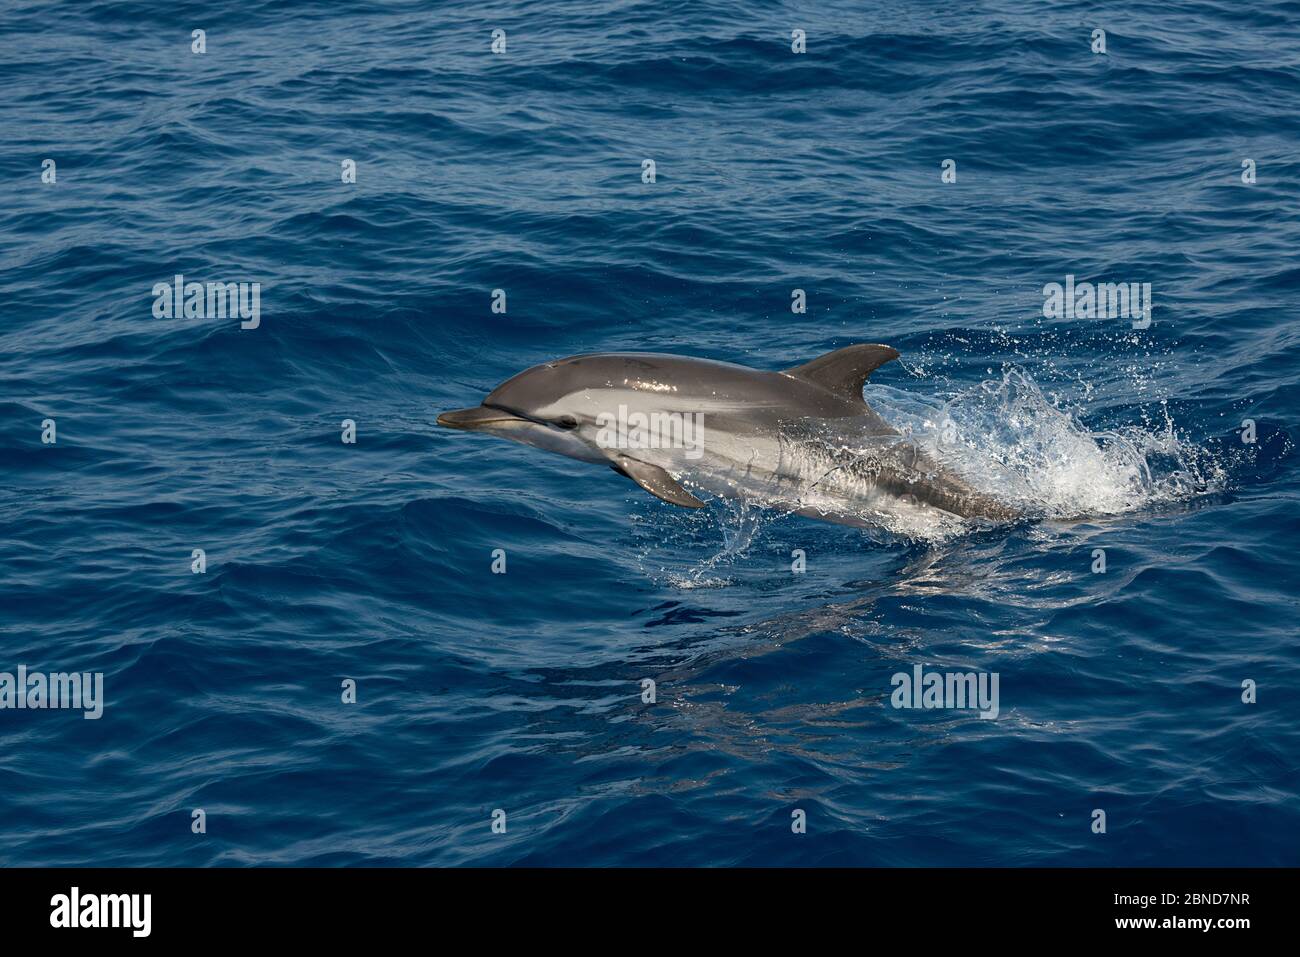 Striped dolphin (Stenella coeruleoalba) jumping, Pelagos Sanctuary for Mediterranean Marine Mammals, Italy. Ligurian Sea, Mediterranean Sea. Stock Photo